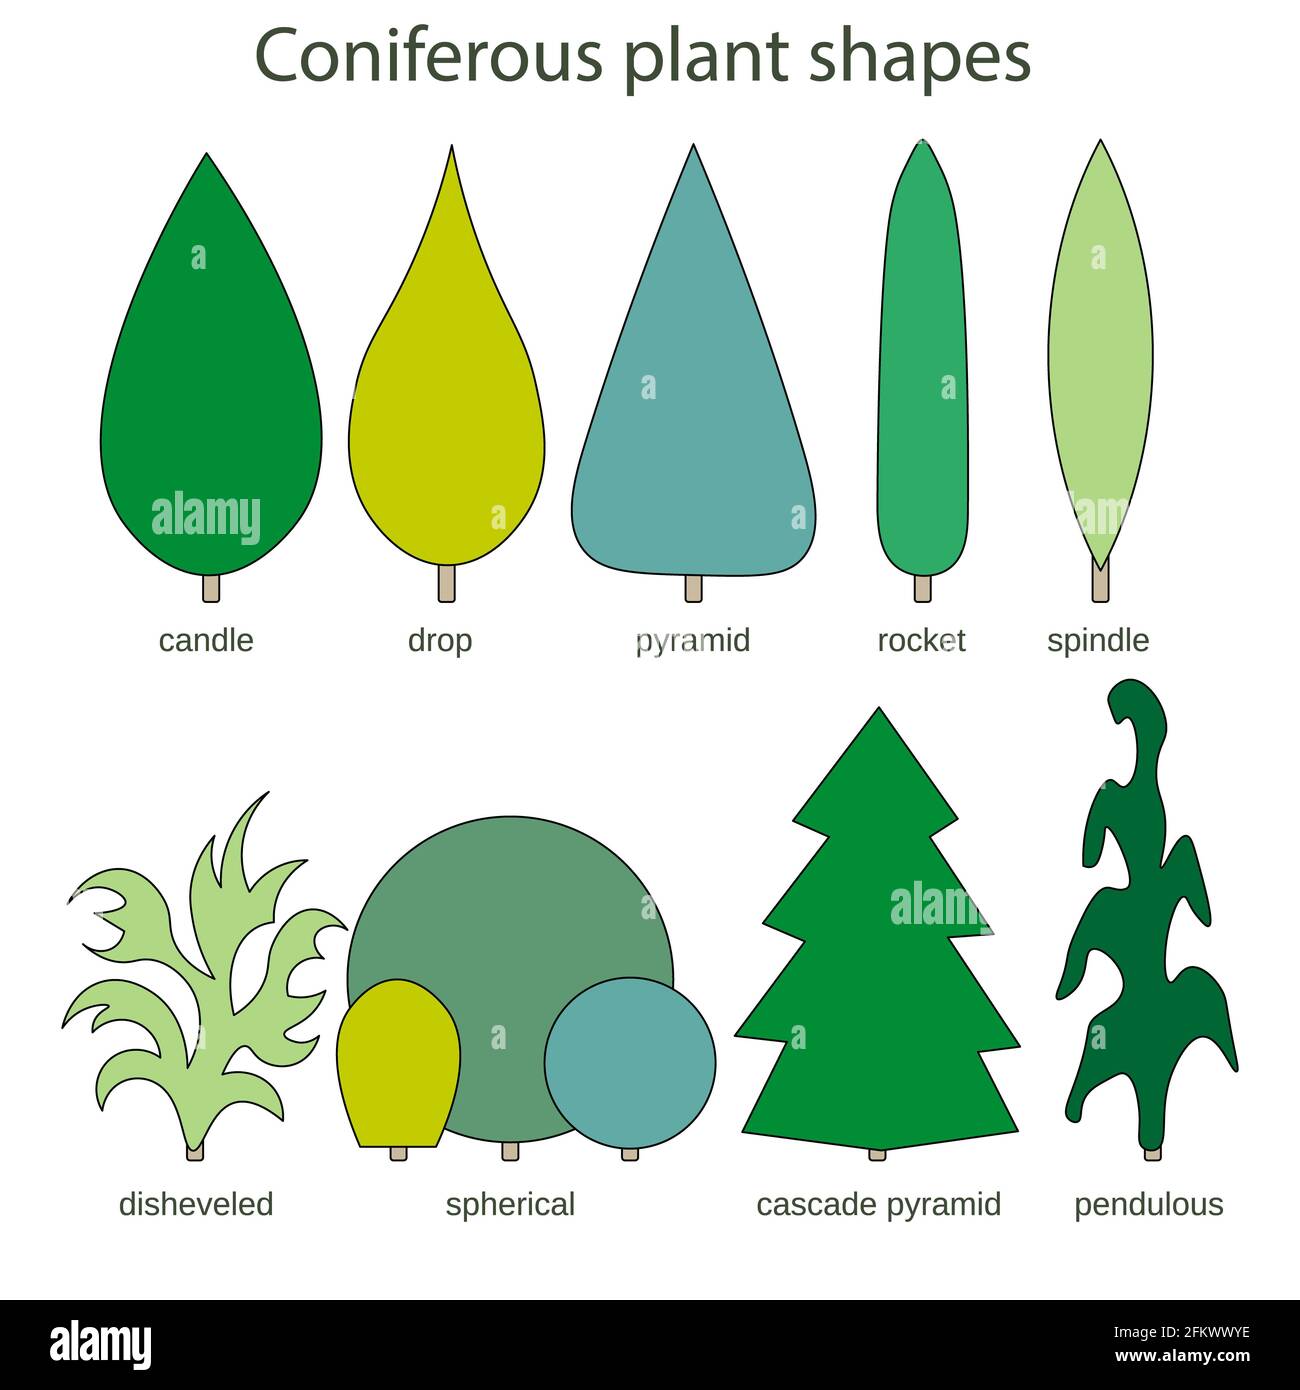 Coniferous plant shapes - disheveled spherical cascade pyramid